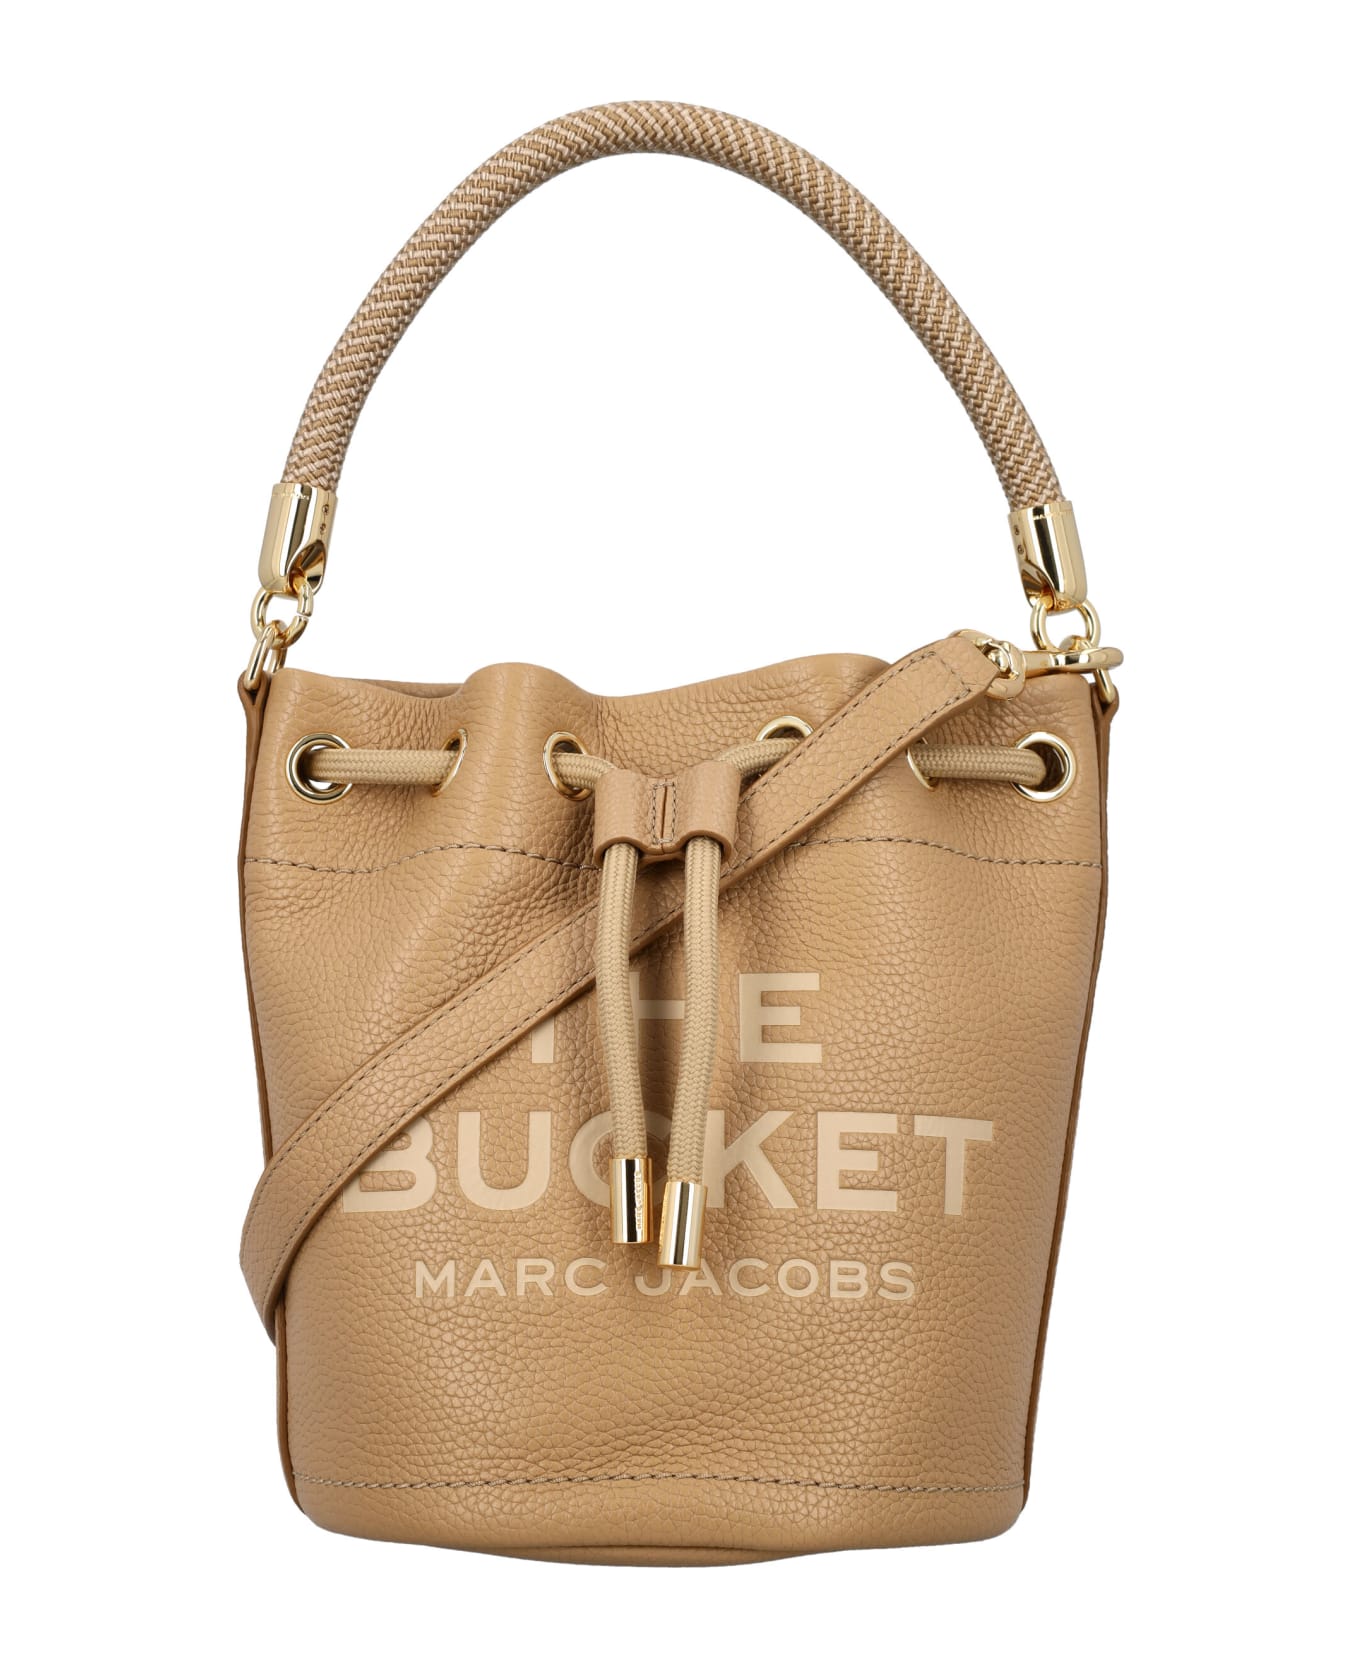 Marc Jacobs The Bucket Bag - CAMEL